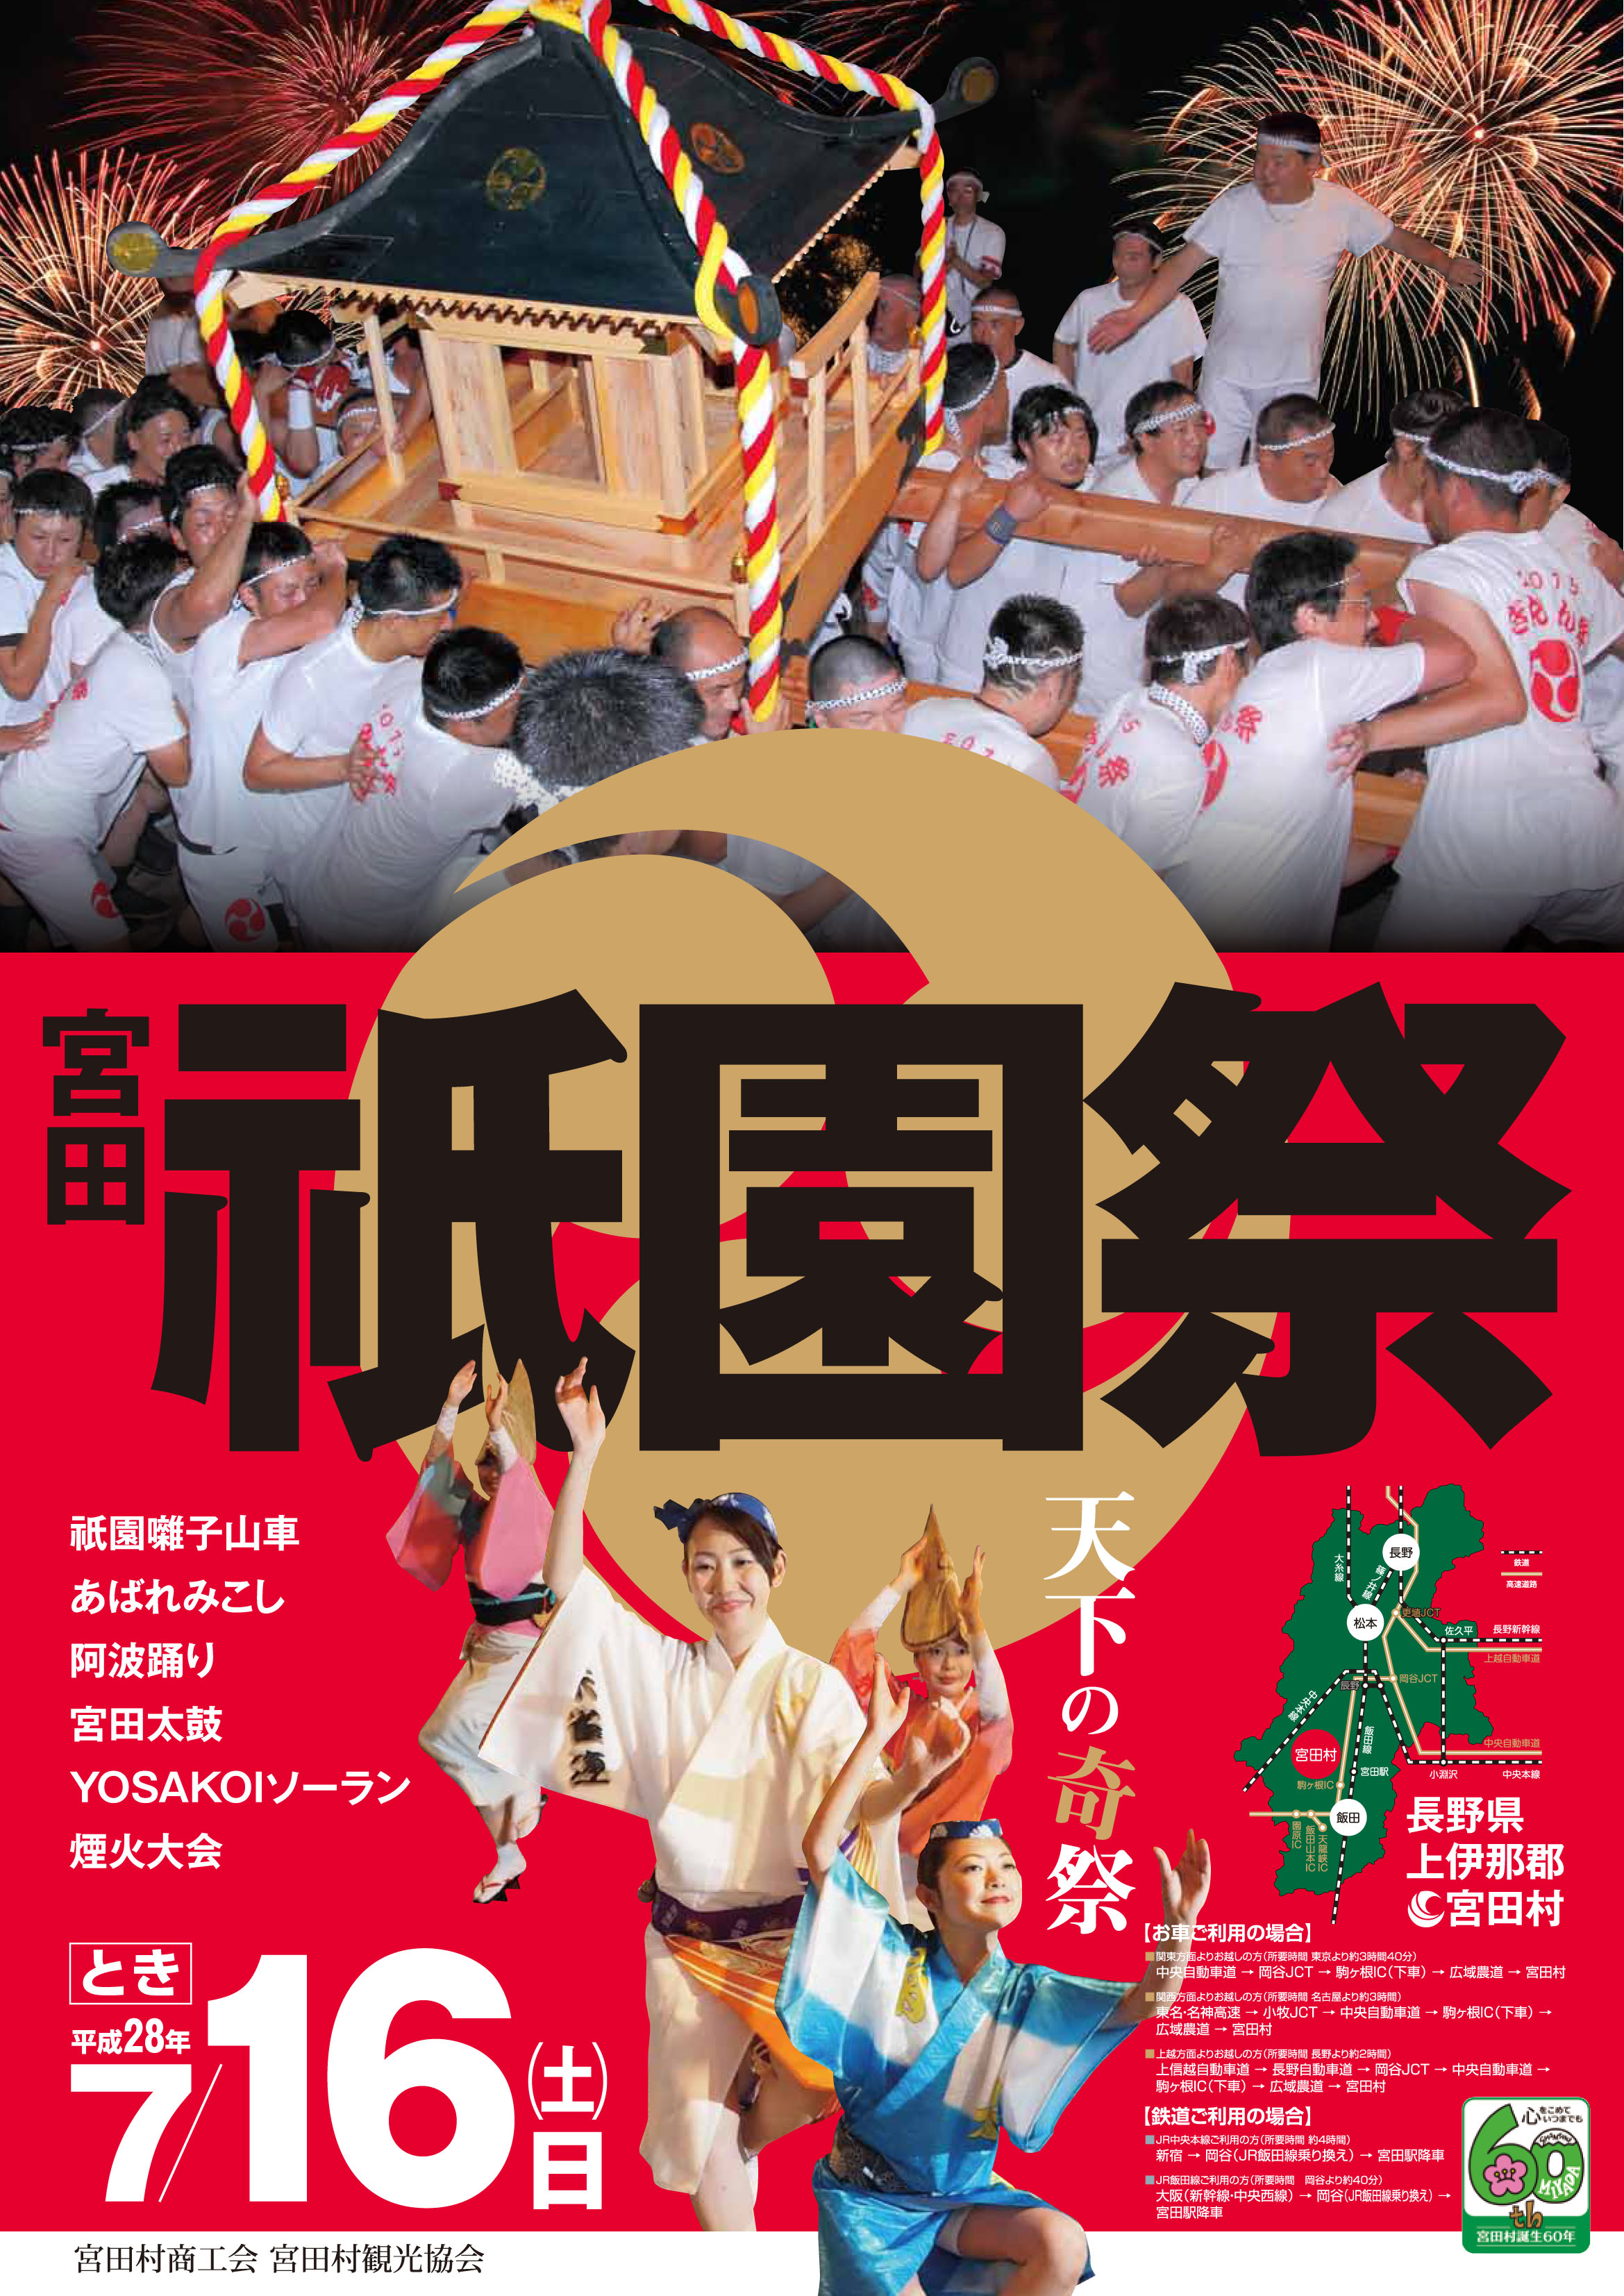 ● 2011年宮田祇園祭観光ポスター用写真募集要項